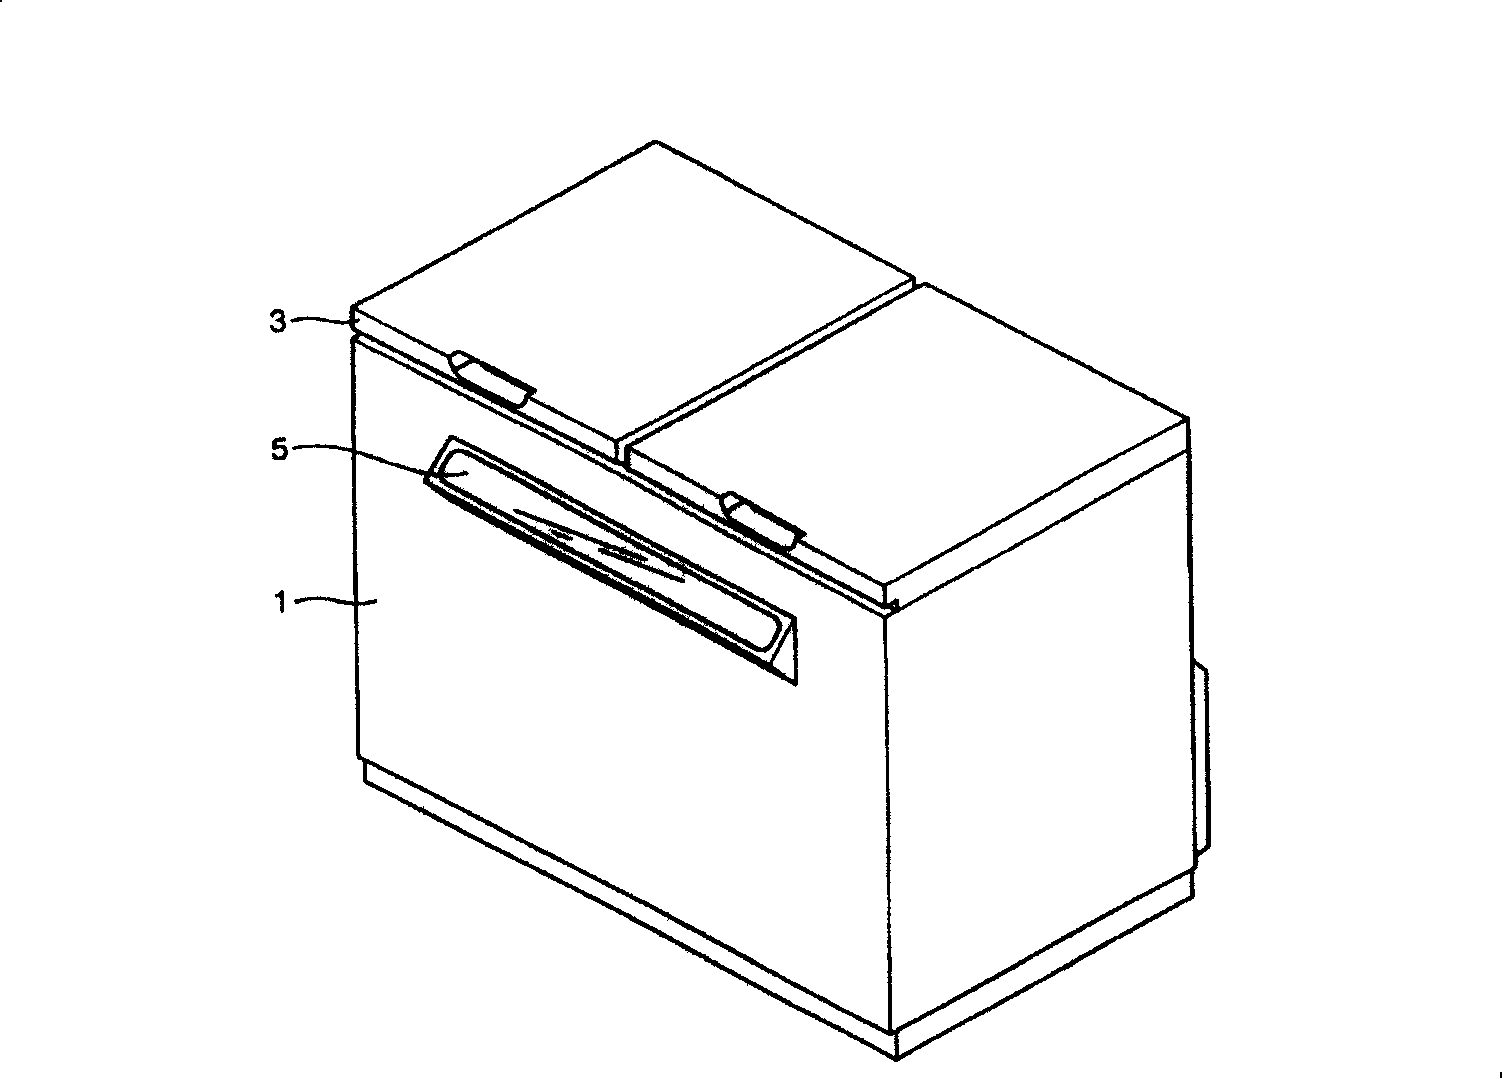 Display device of kraut refrigerator